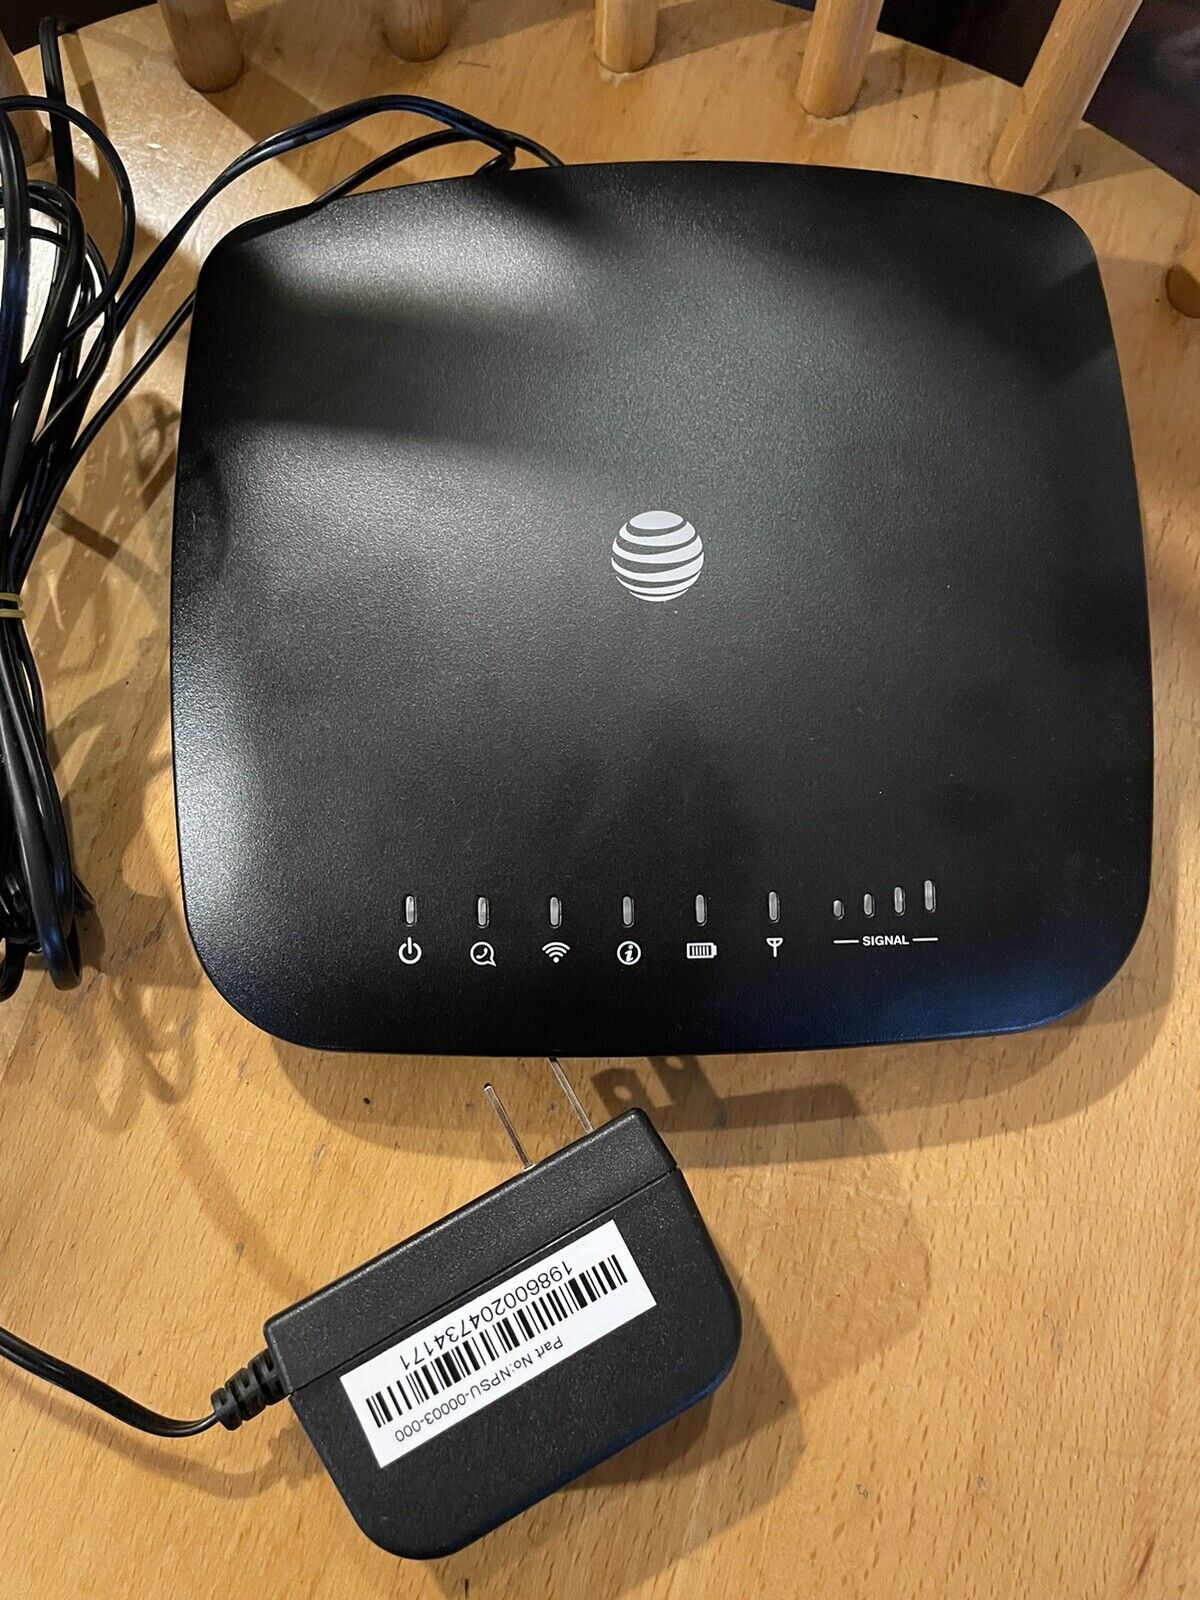 Netcomm Wireless Internet Router IFWA-40 4g LTE Wi-Fi Hotspot AT&T